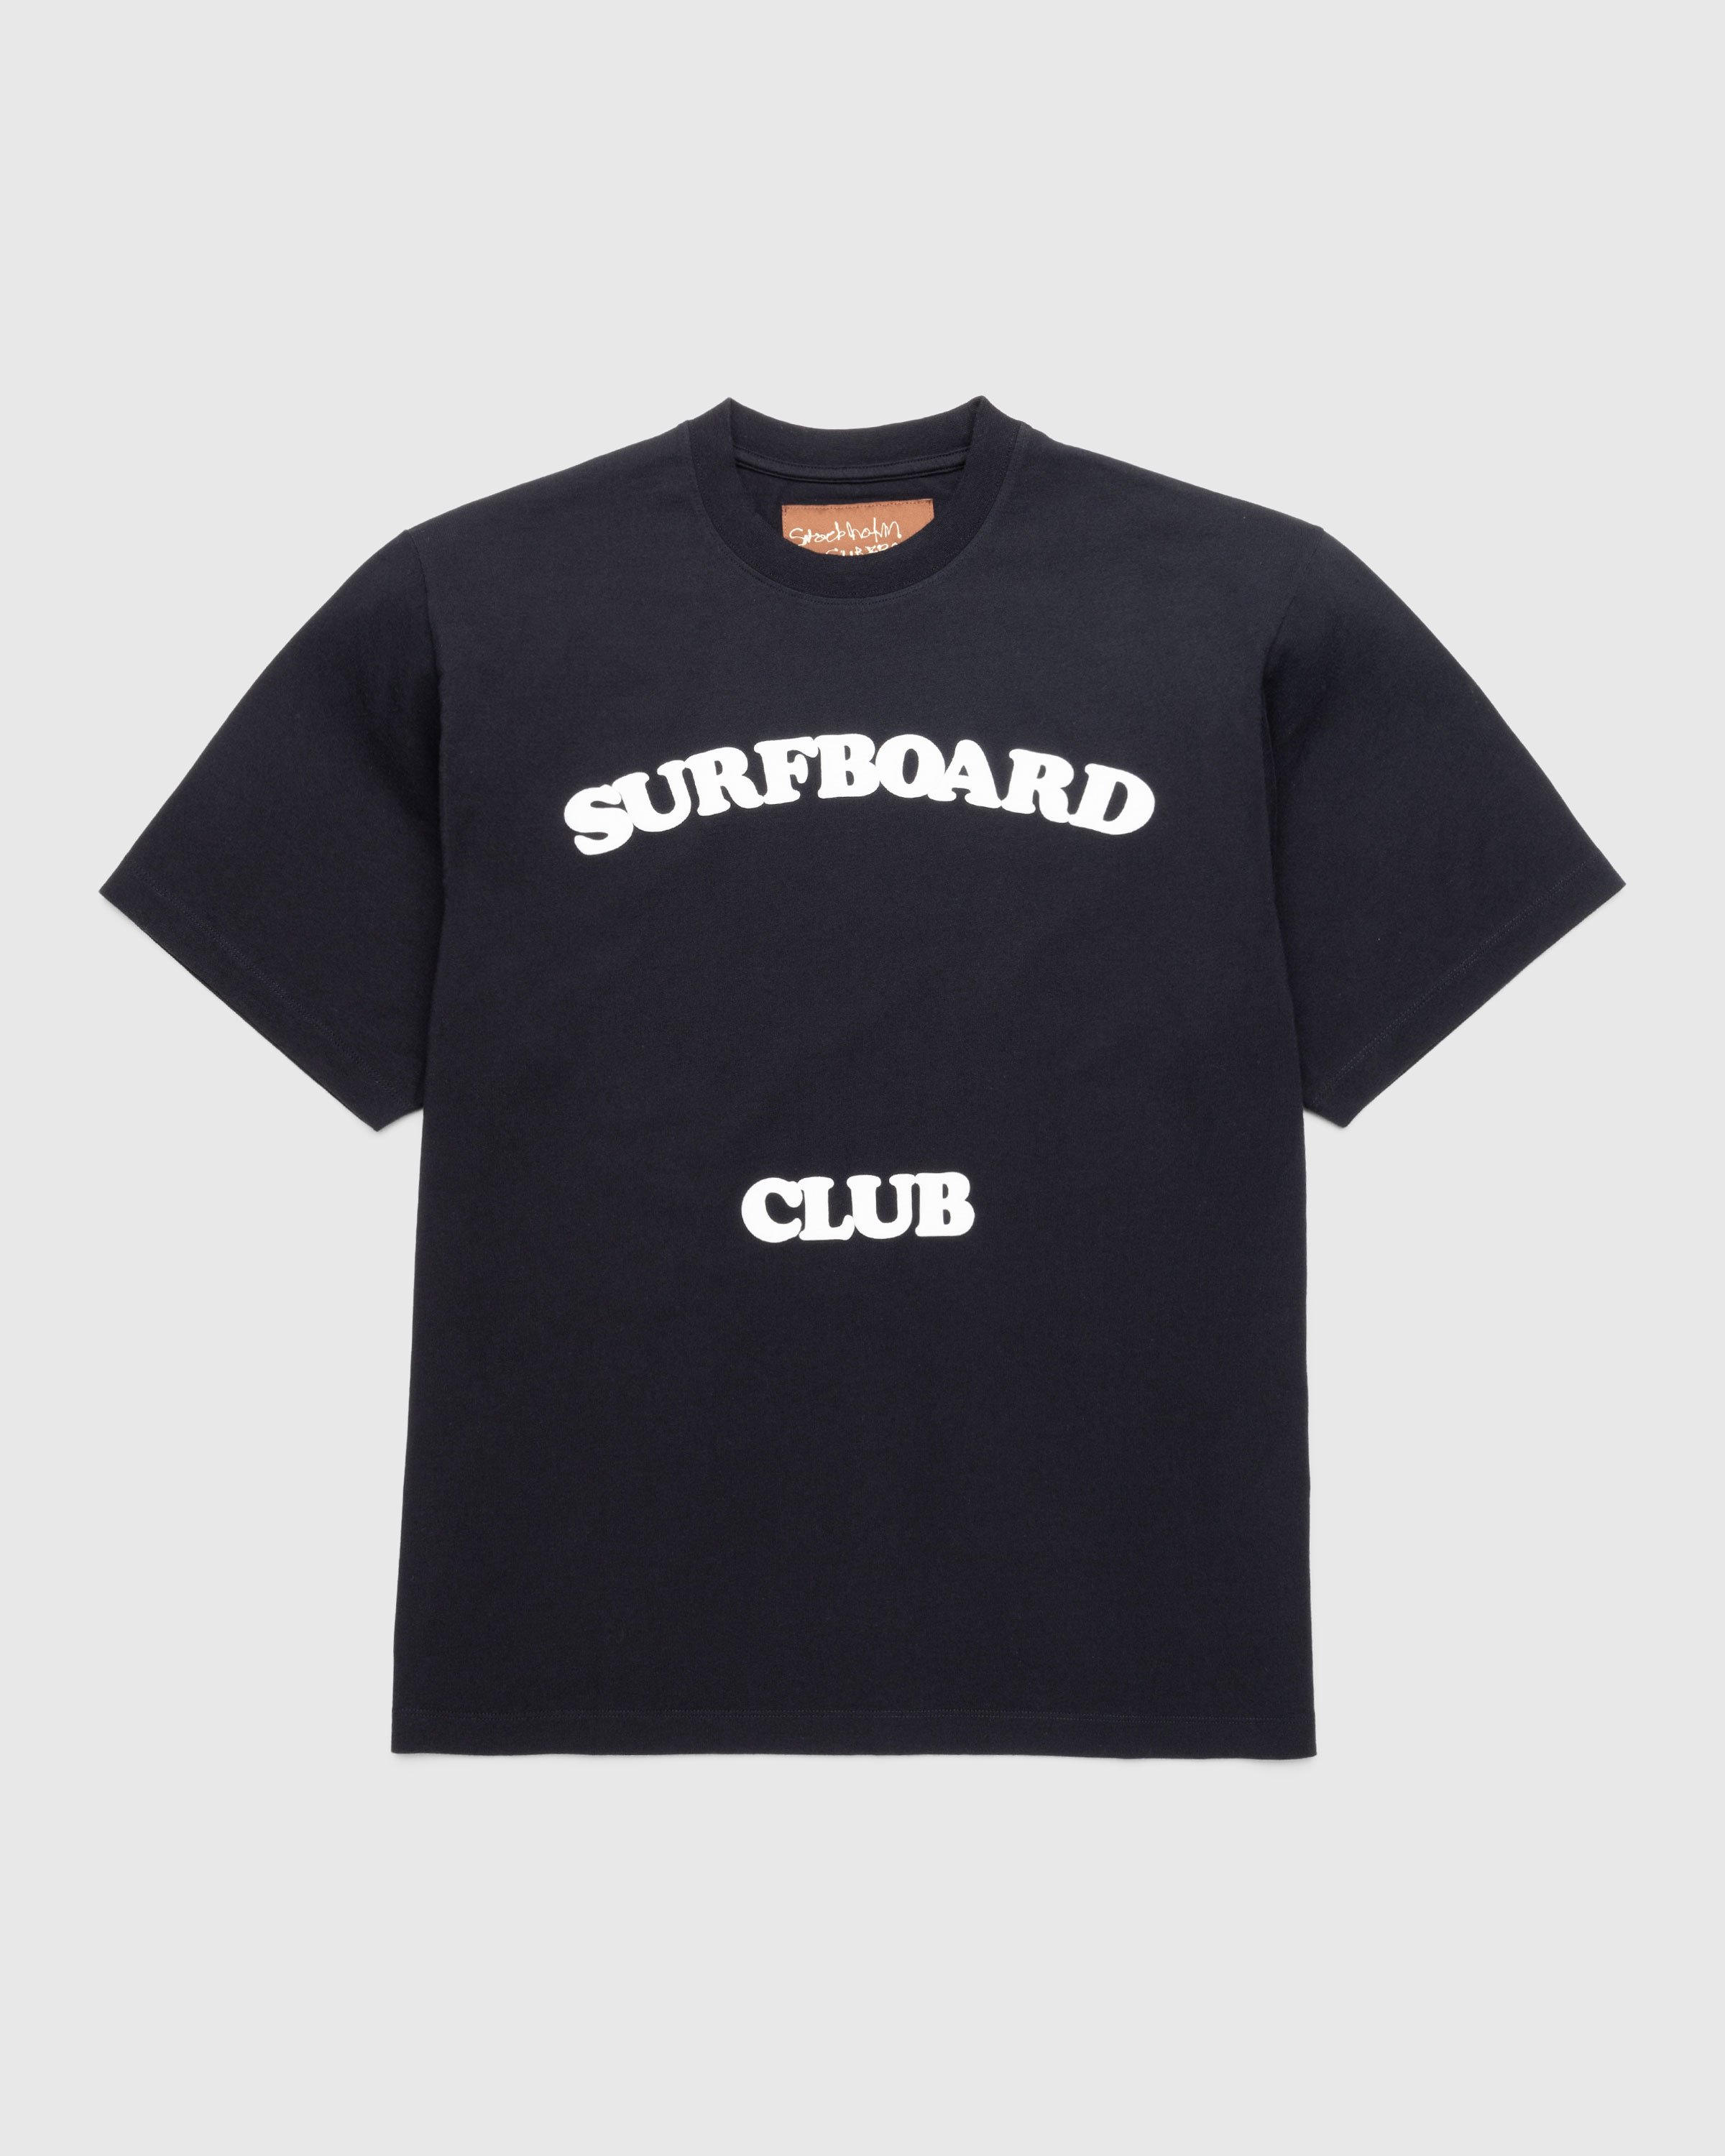 Stockholm Surfboard Club - Leaf Club Black Black - Clothing - Black - Image 1